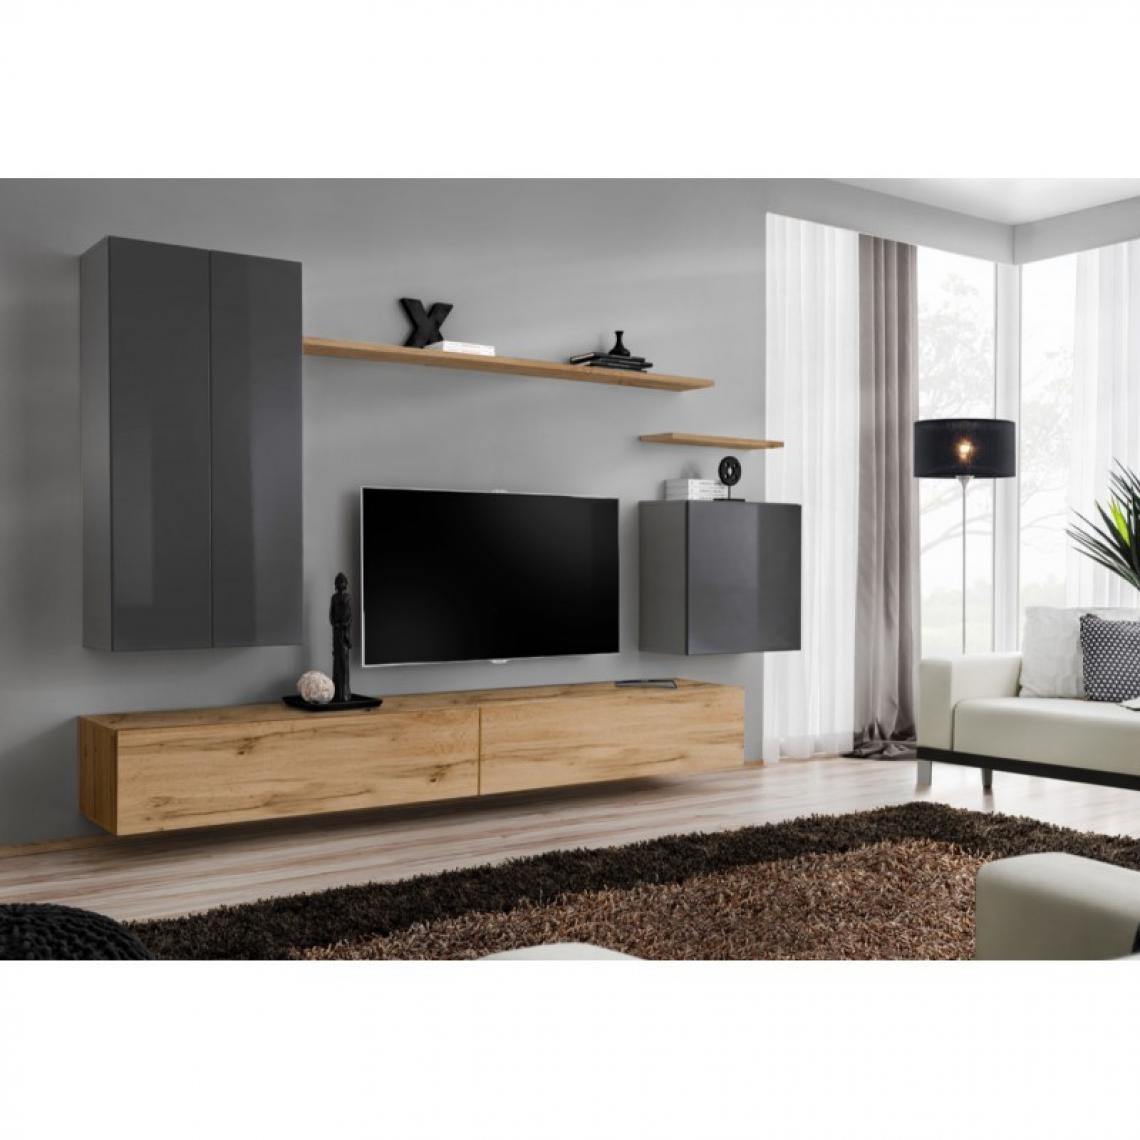 Ac-Deco - Meuble TV Mural Design Switch II 270cm Gris & Naturel - Meubles TV, Hi-Fi